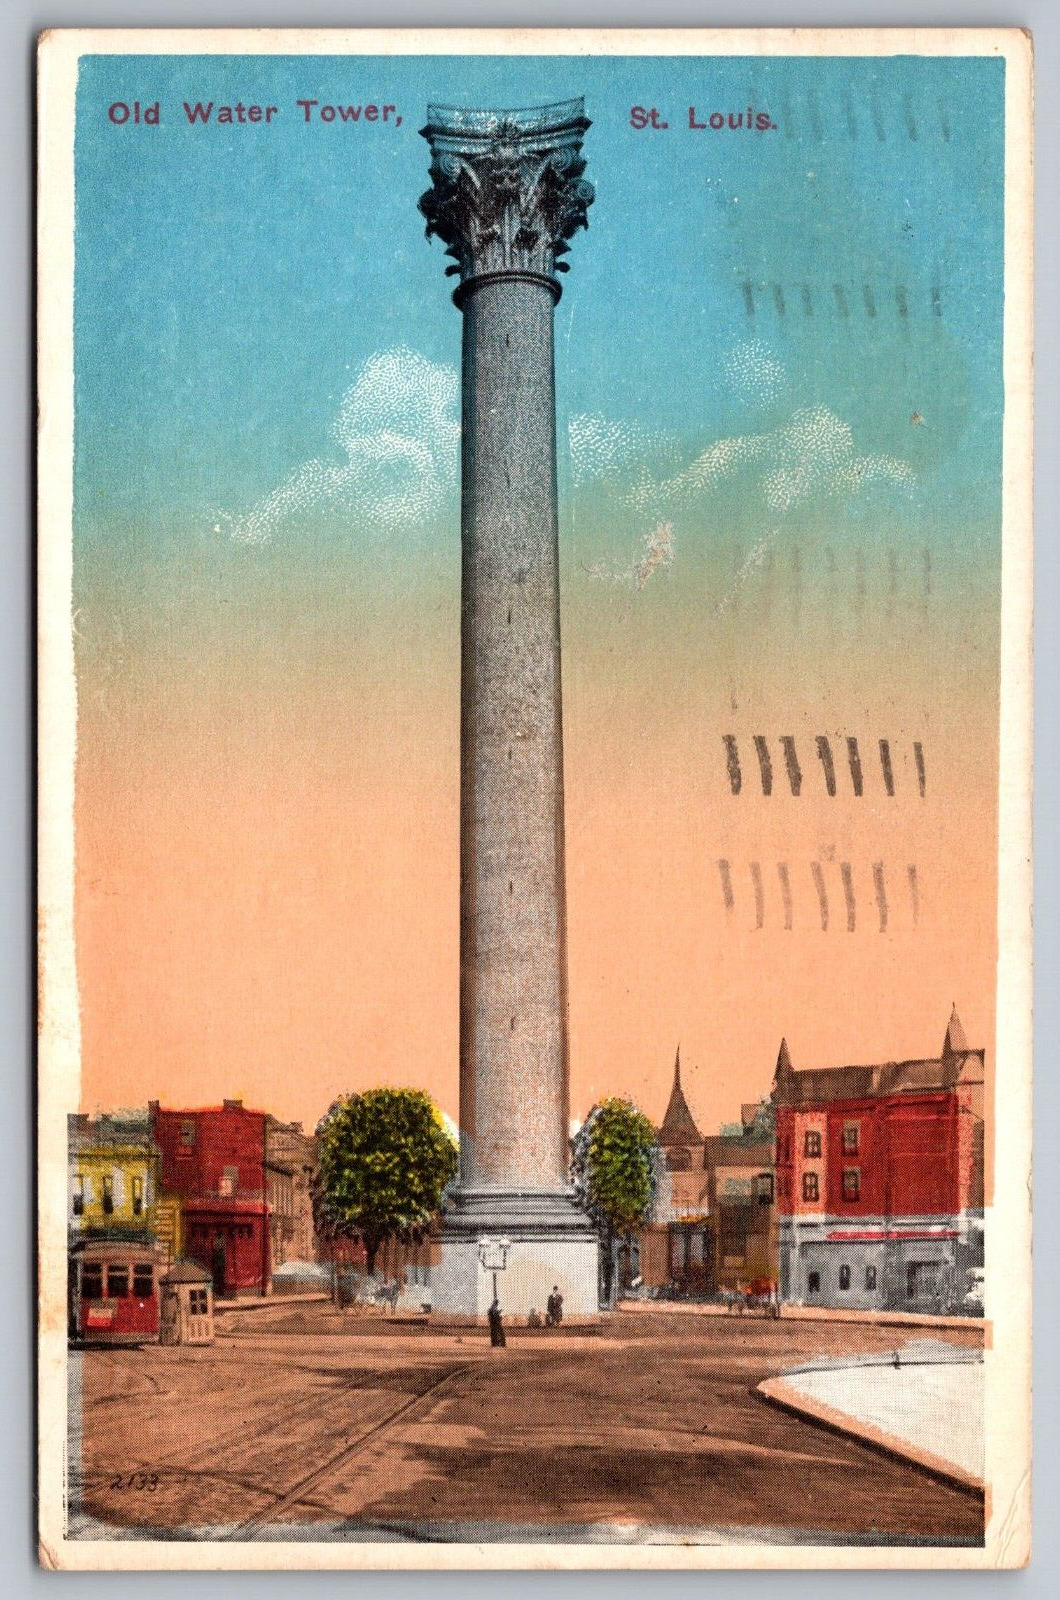 Old Water Tower St. Louis Missouri Antique Postcard c.1915